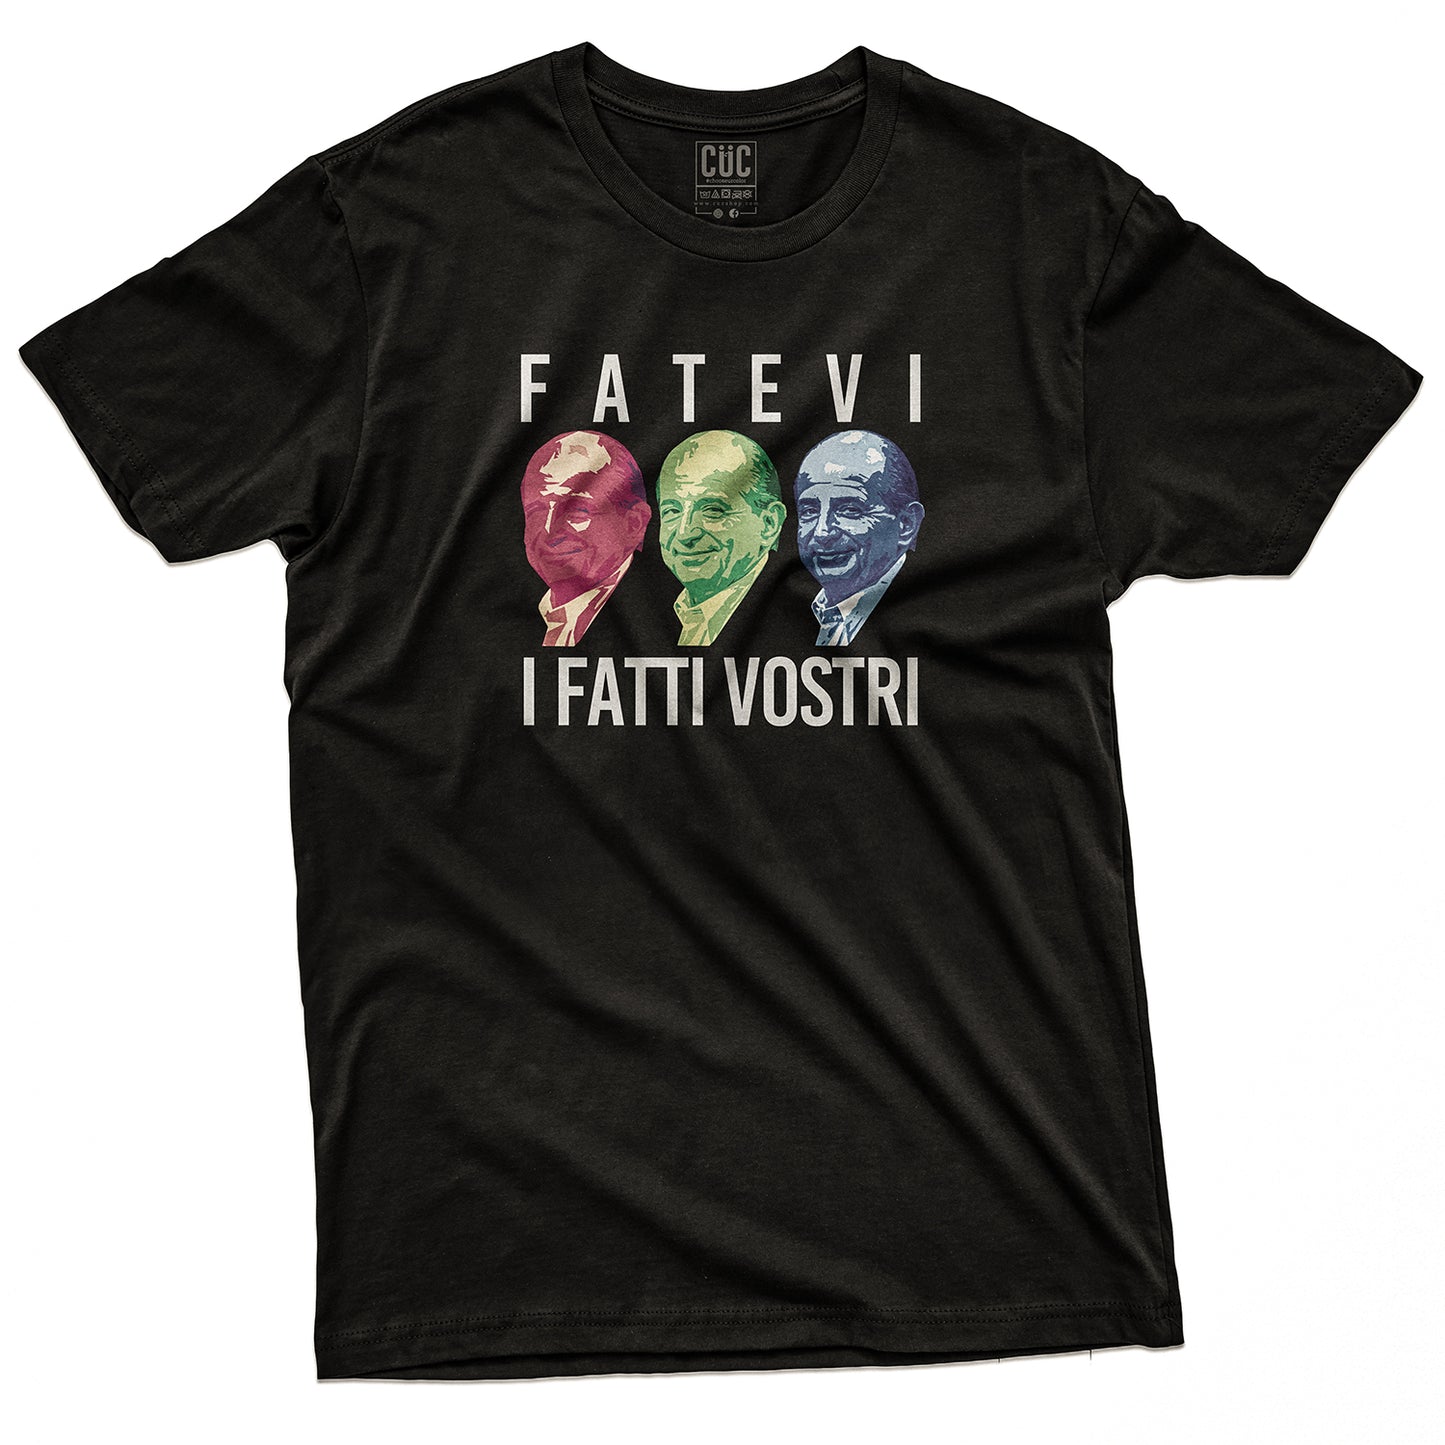 CUC T-Shirt FATEVI - Fatti Vostri - Tv  #chooseurcolor